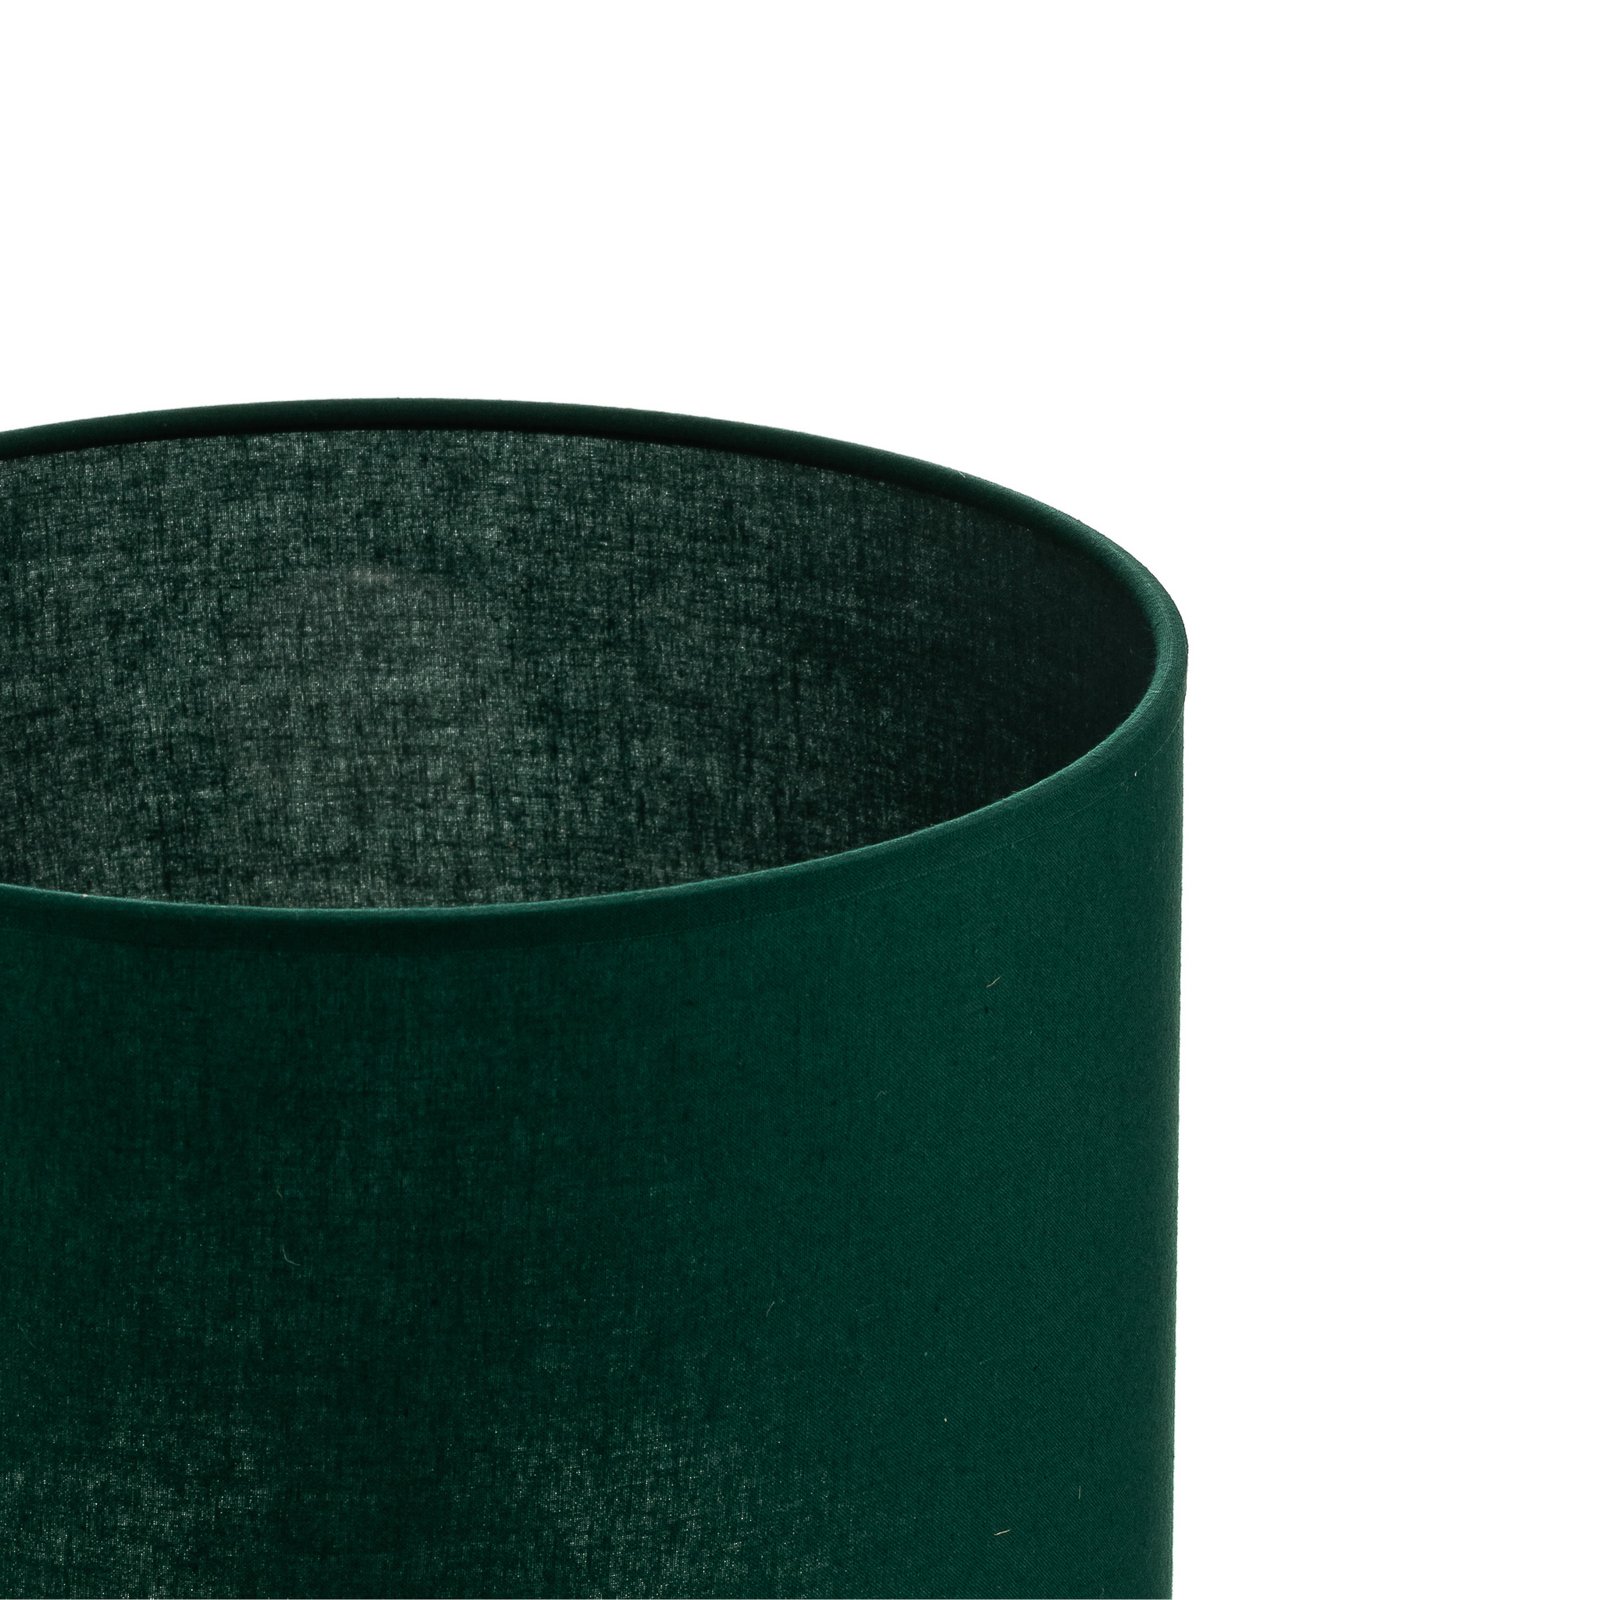 Pantalla Roller, verde, Ø 25 cm, altura 18 cm